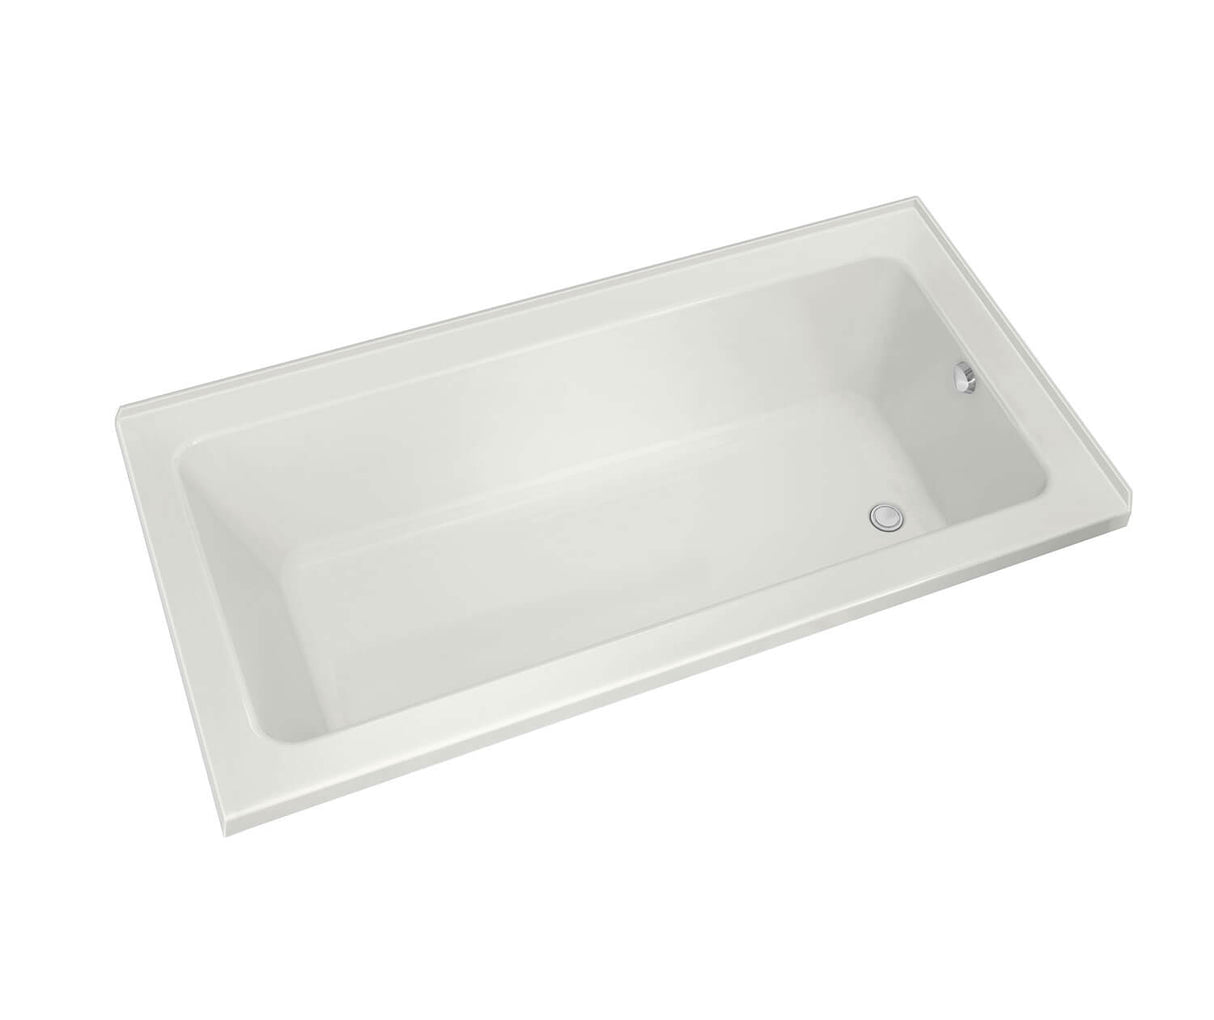 MAAX 106206-000-001-107 Pose 6632 IF Acrylic Corner Right Left-Hand Drain Bathtub in White